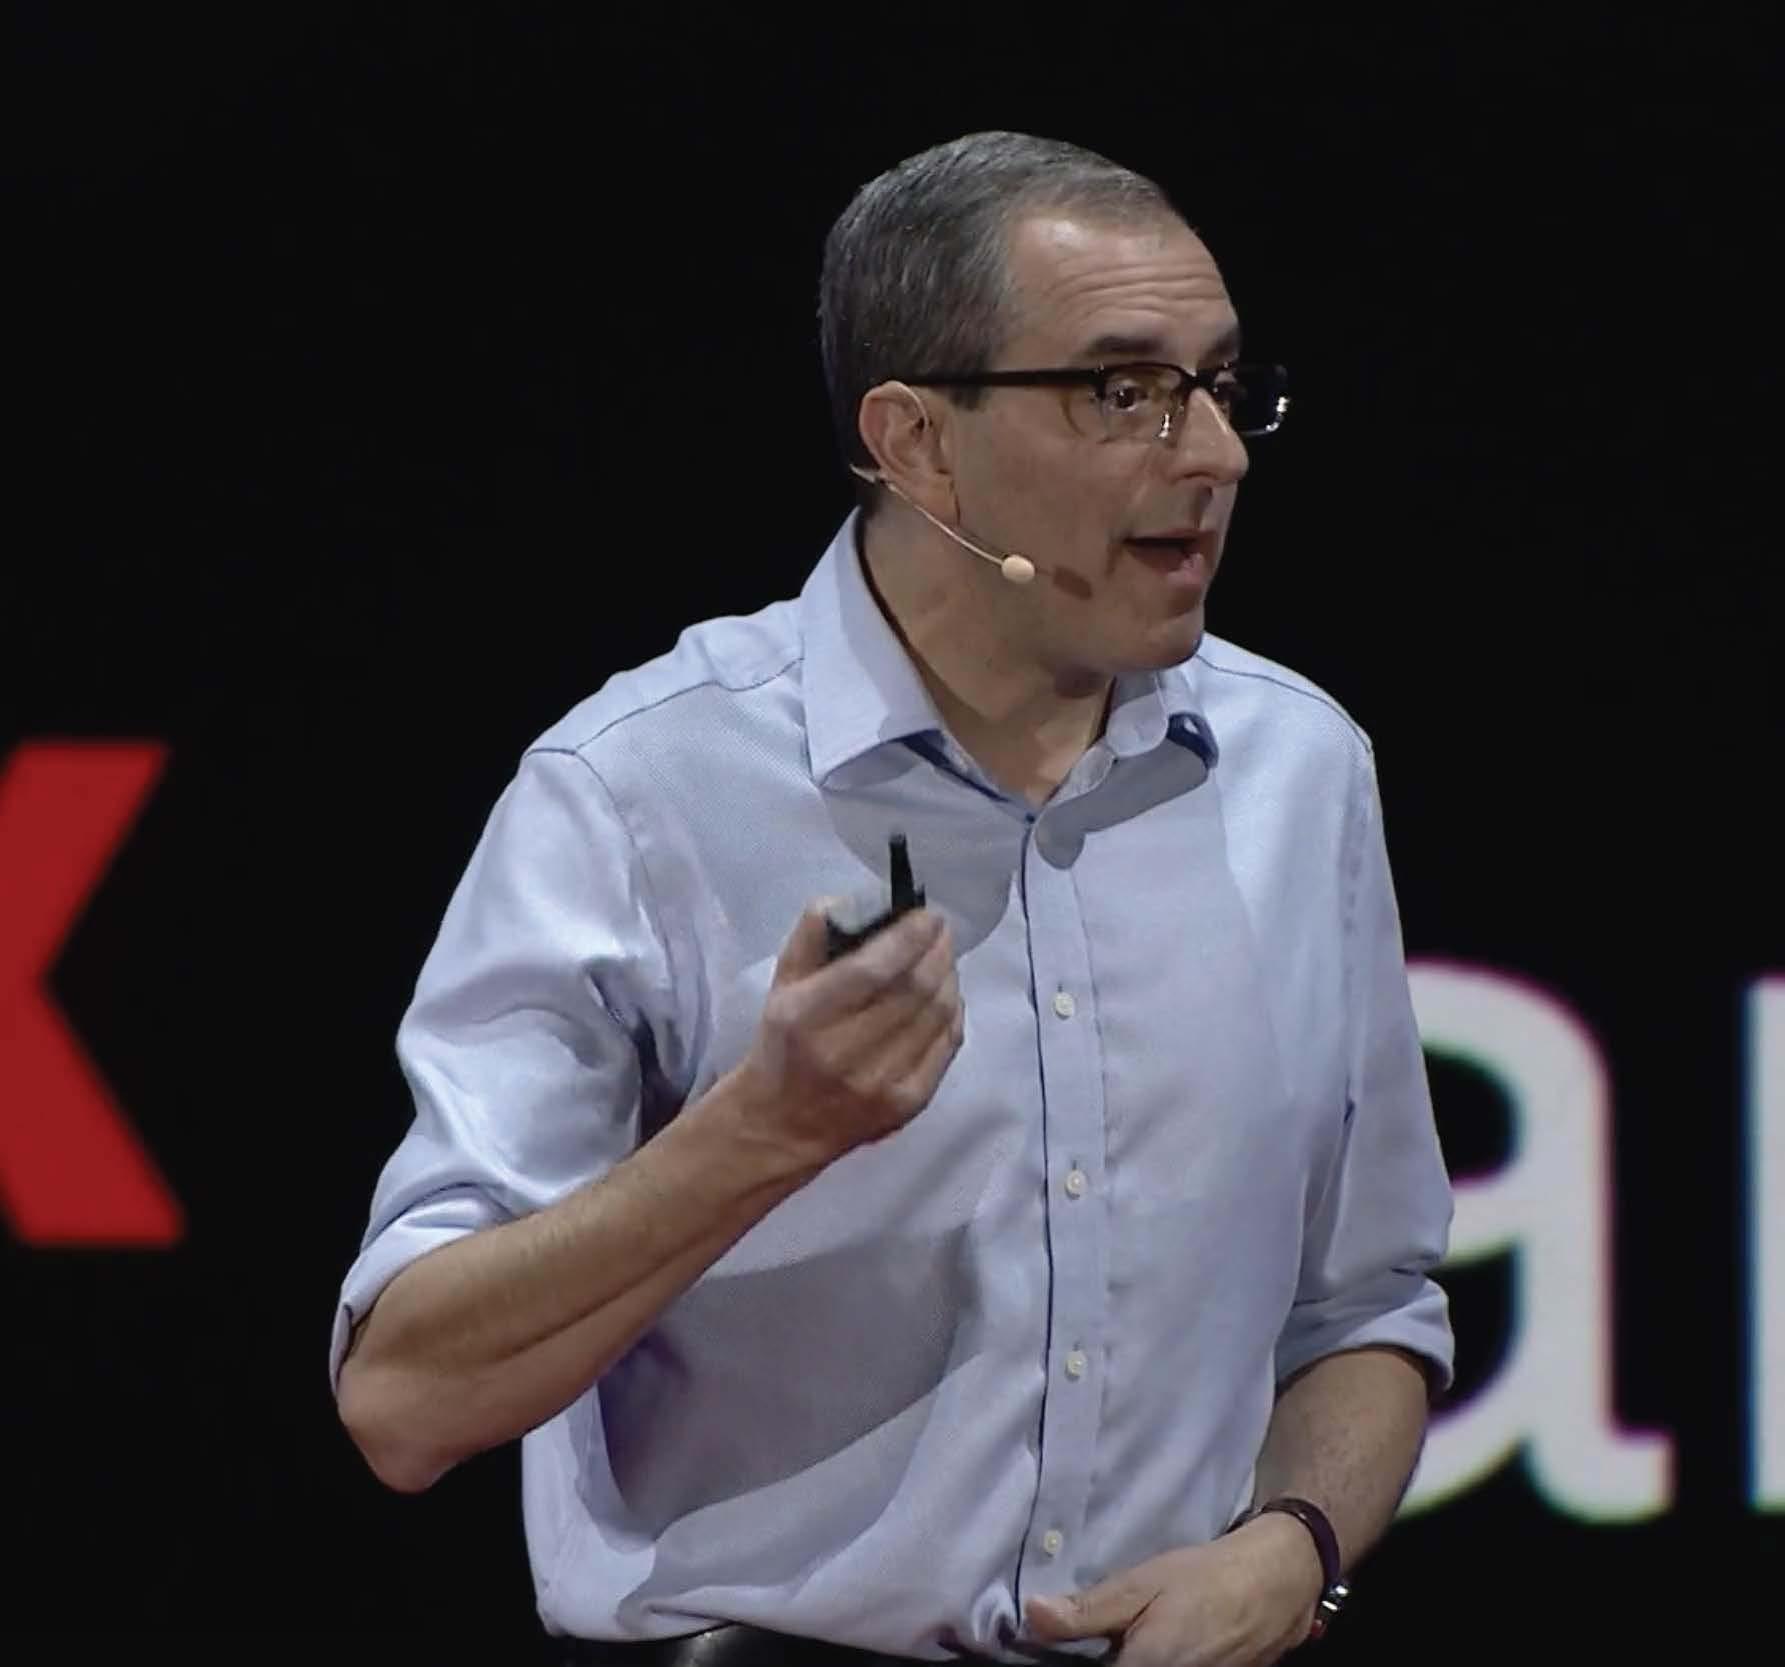 David Autor presenting at TEDX